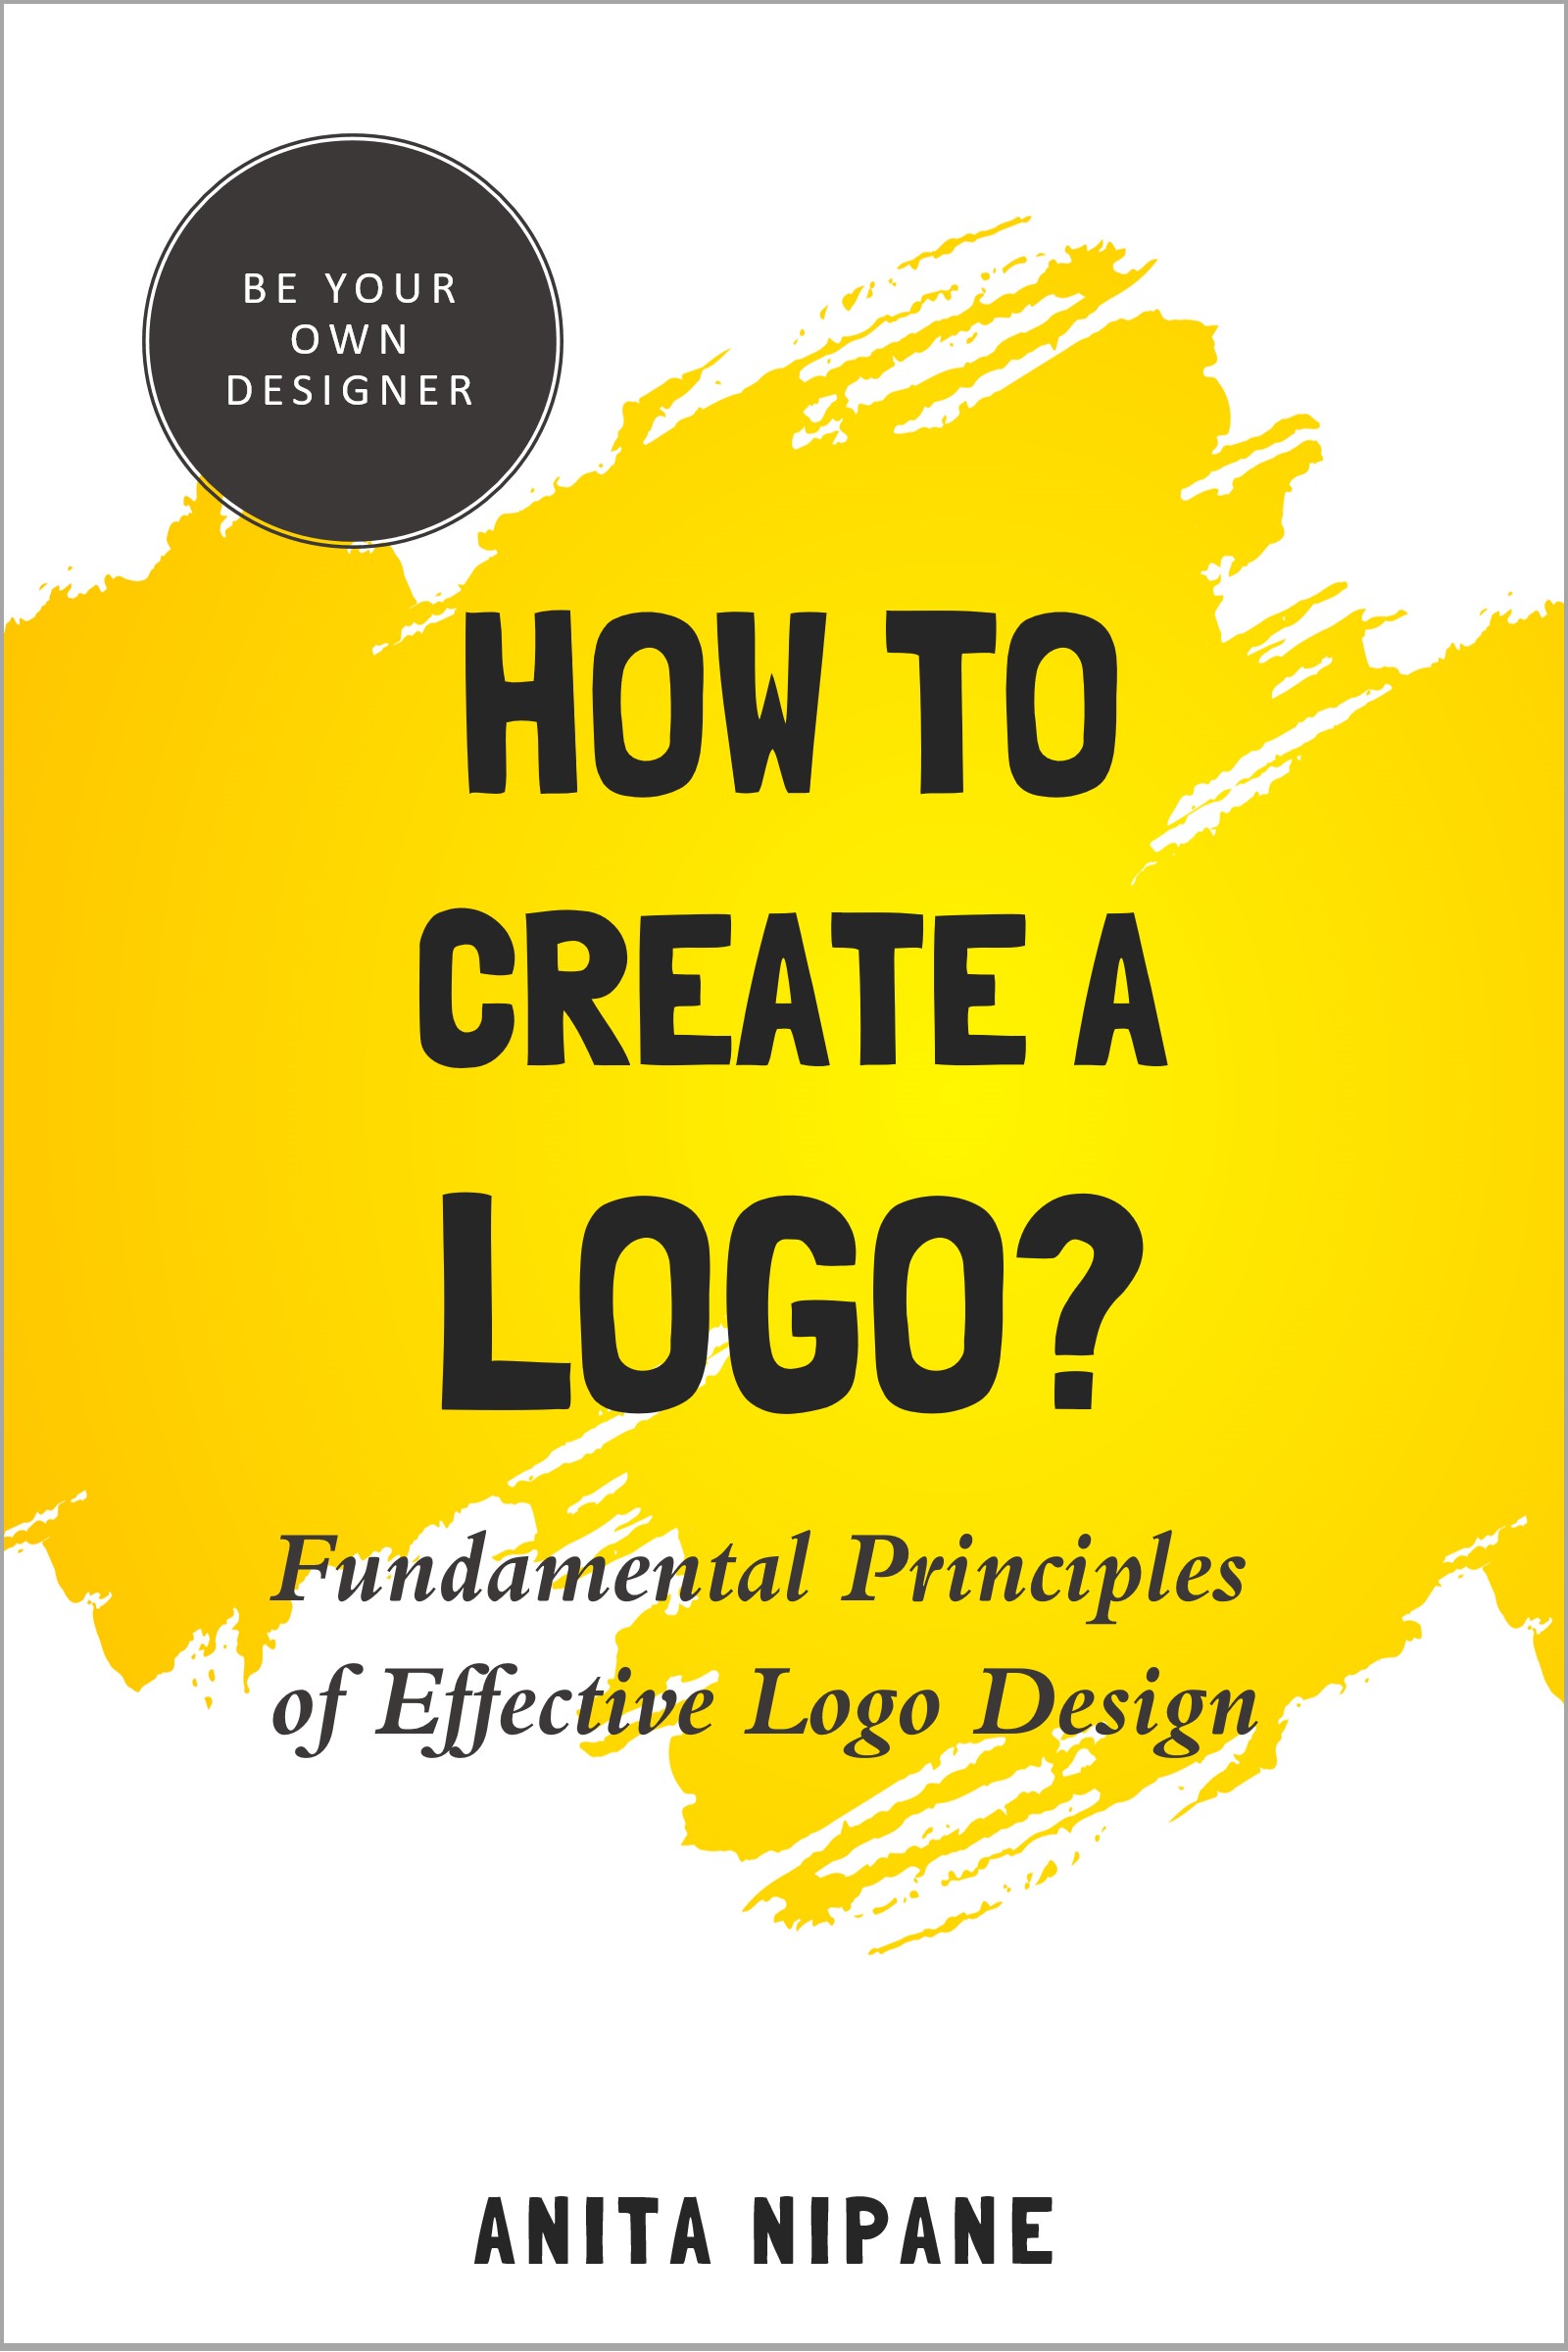 FREE: How to Create a Logo? Fundamental Principles of Effective Logo Design by Anita Nipane